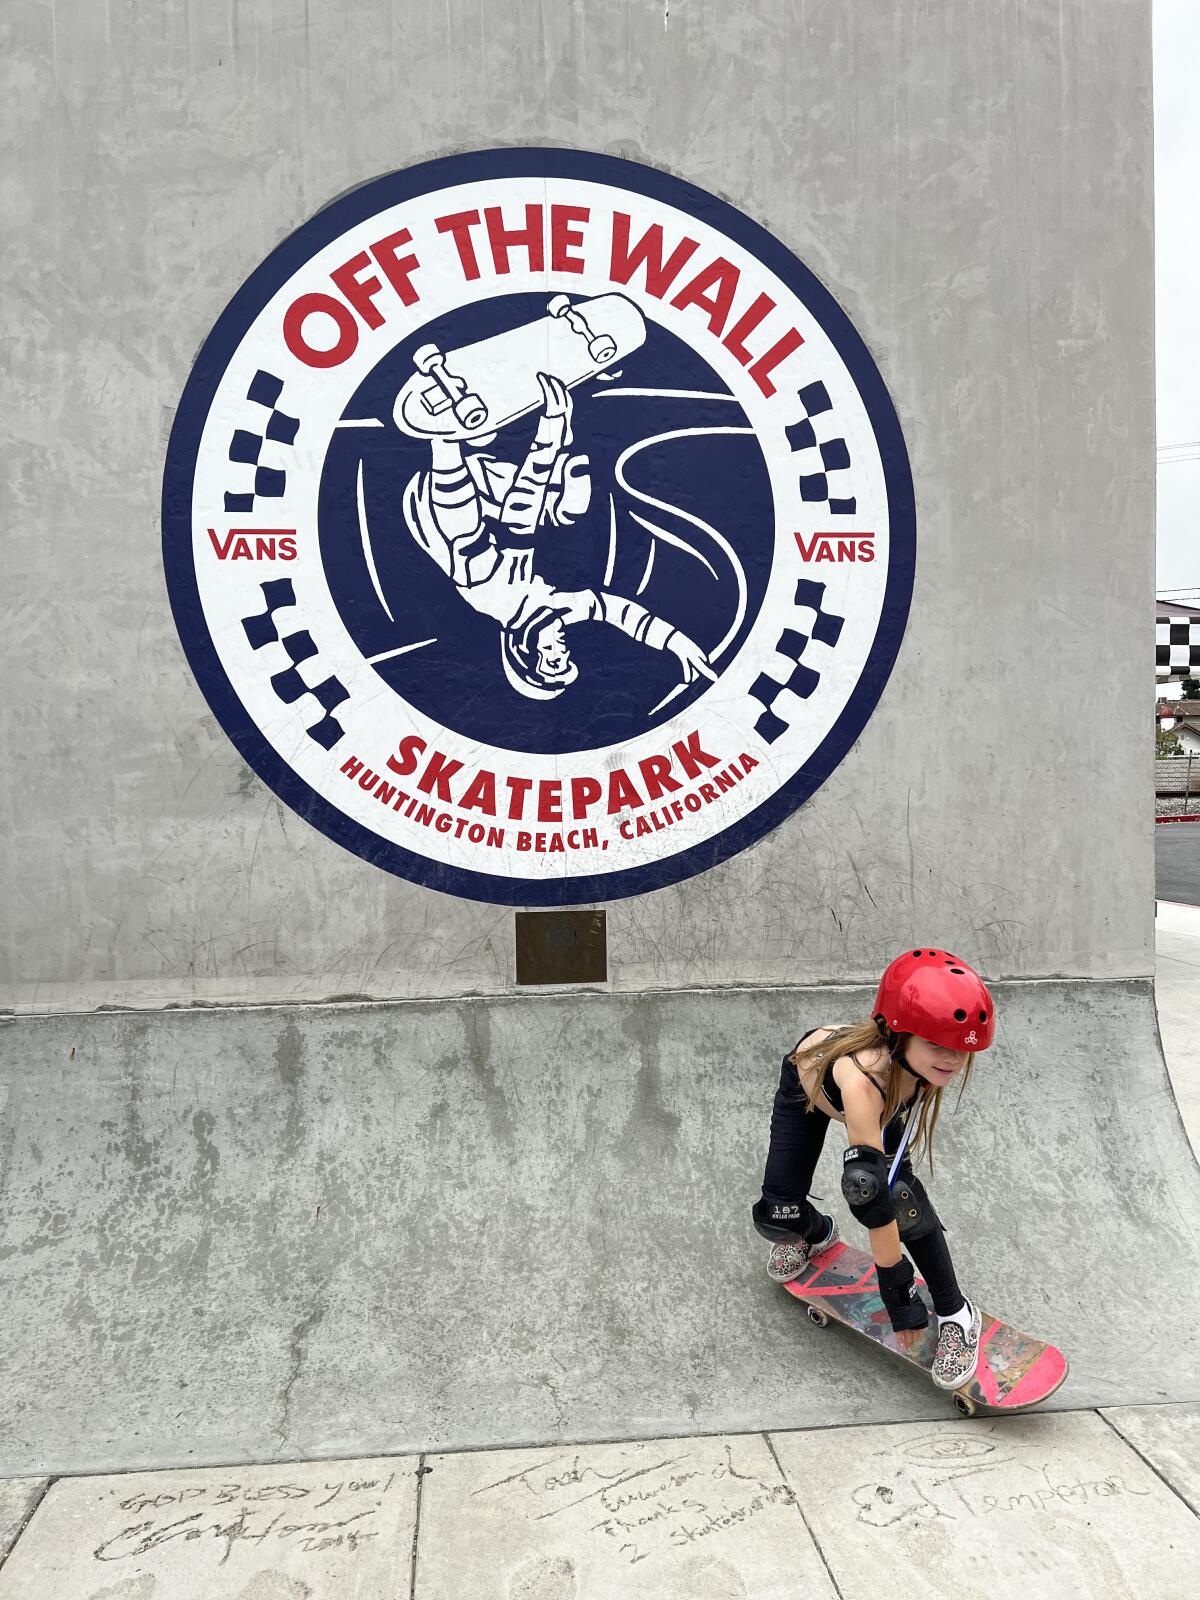 Brooke Benton of Huntington Beach skates at the Vans Off the Wall skatepark.